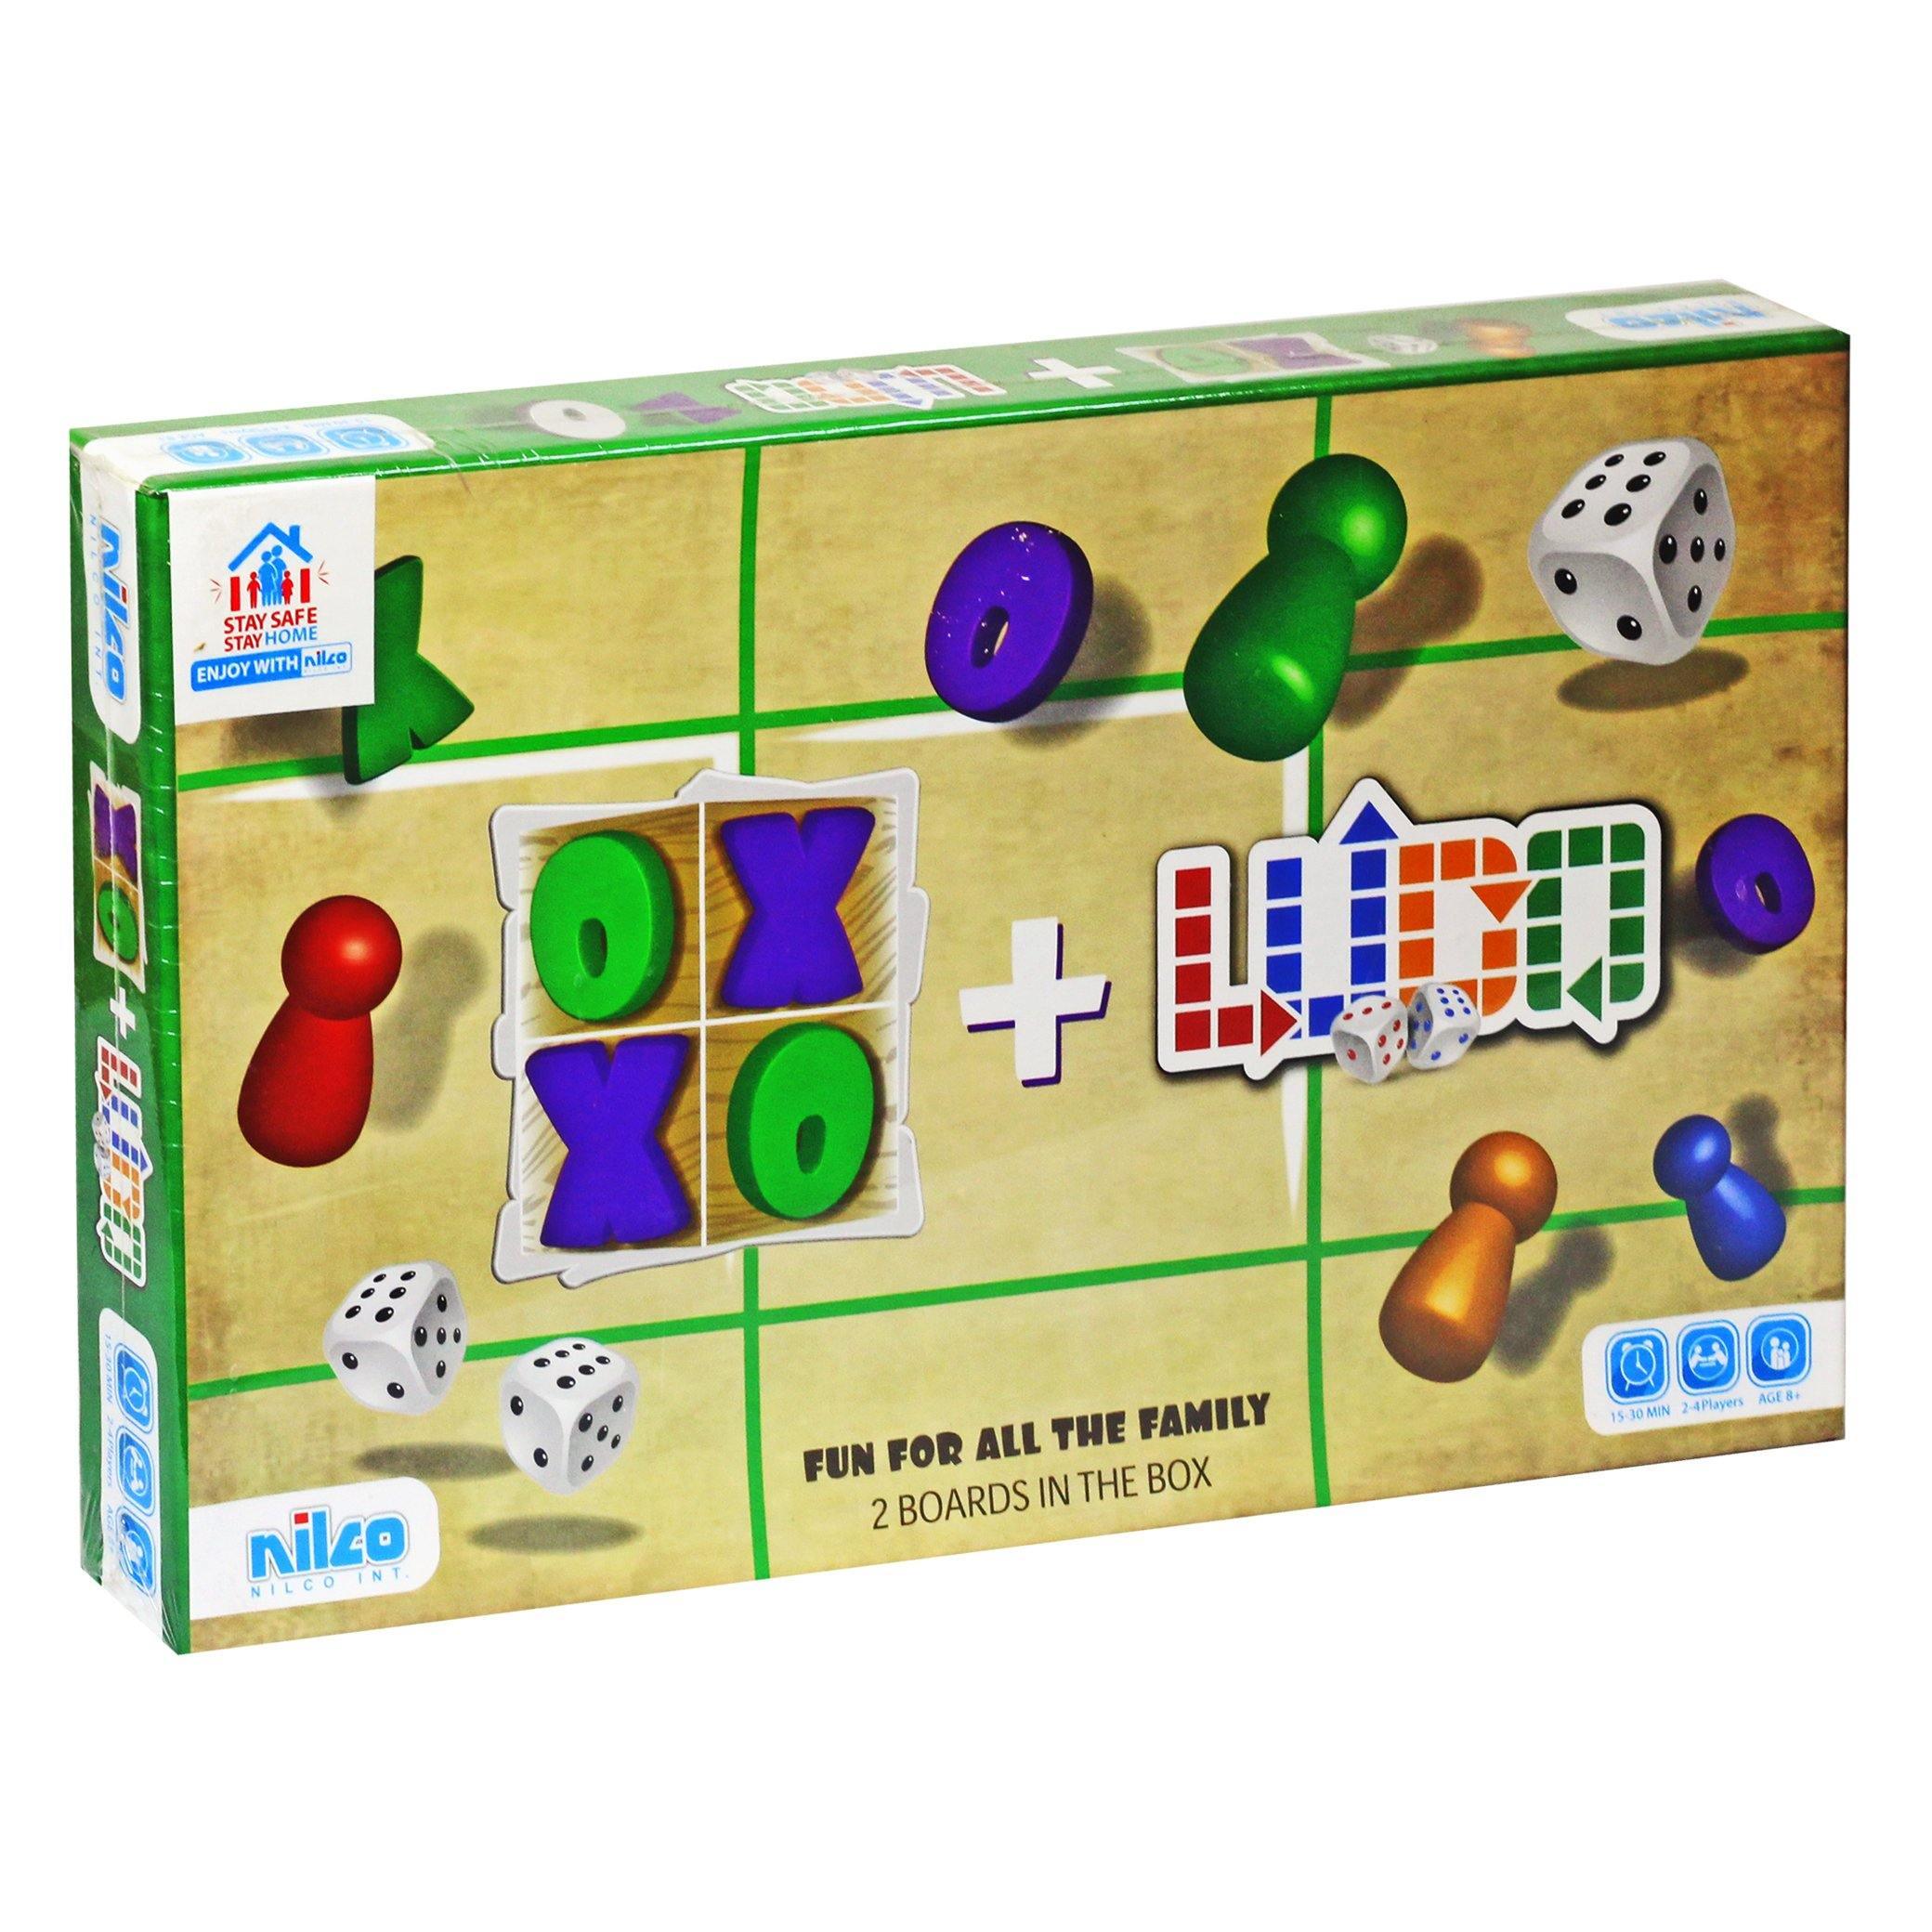 Nilco 0870 Ludo & XO Board Game - BumbleToys - 8-13 Years, Card & Board Games, Nilco, Puzzle & Board & Card Games, Unisex